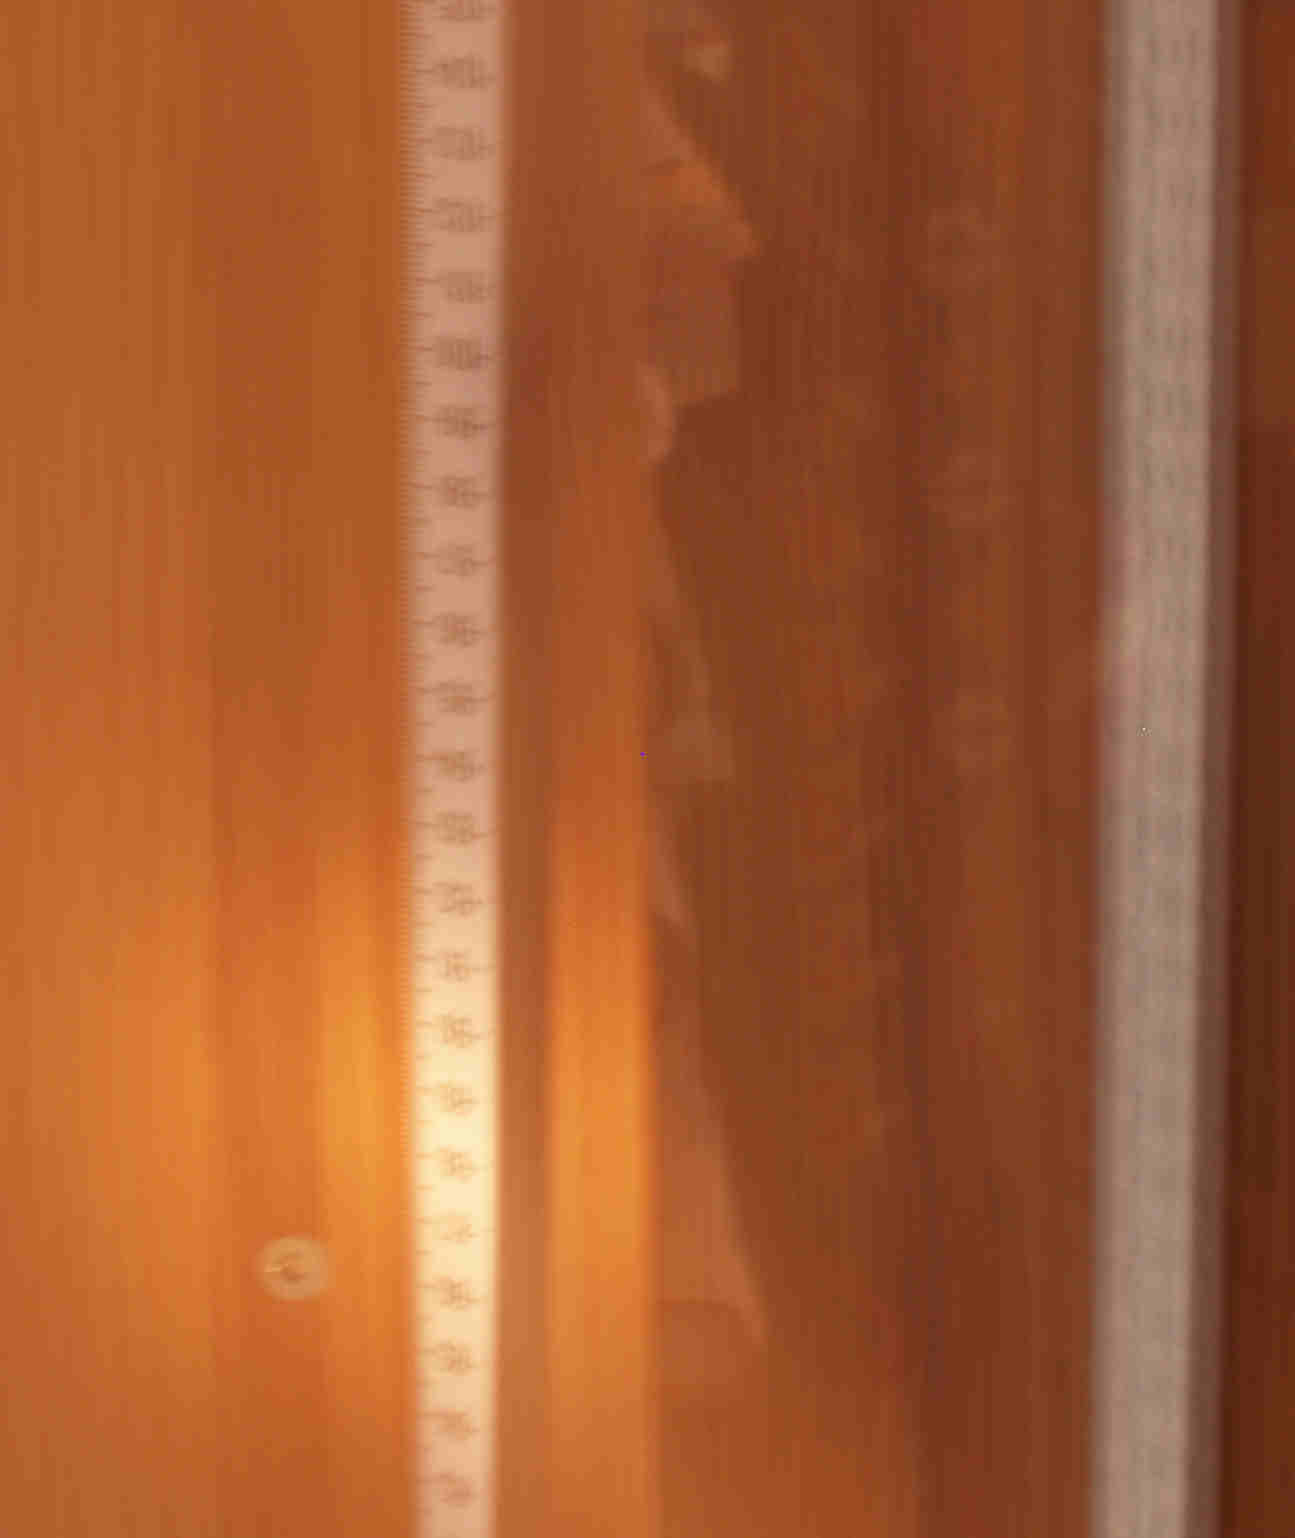 Ghost tape measure (upper photo)